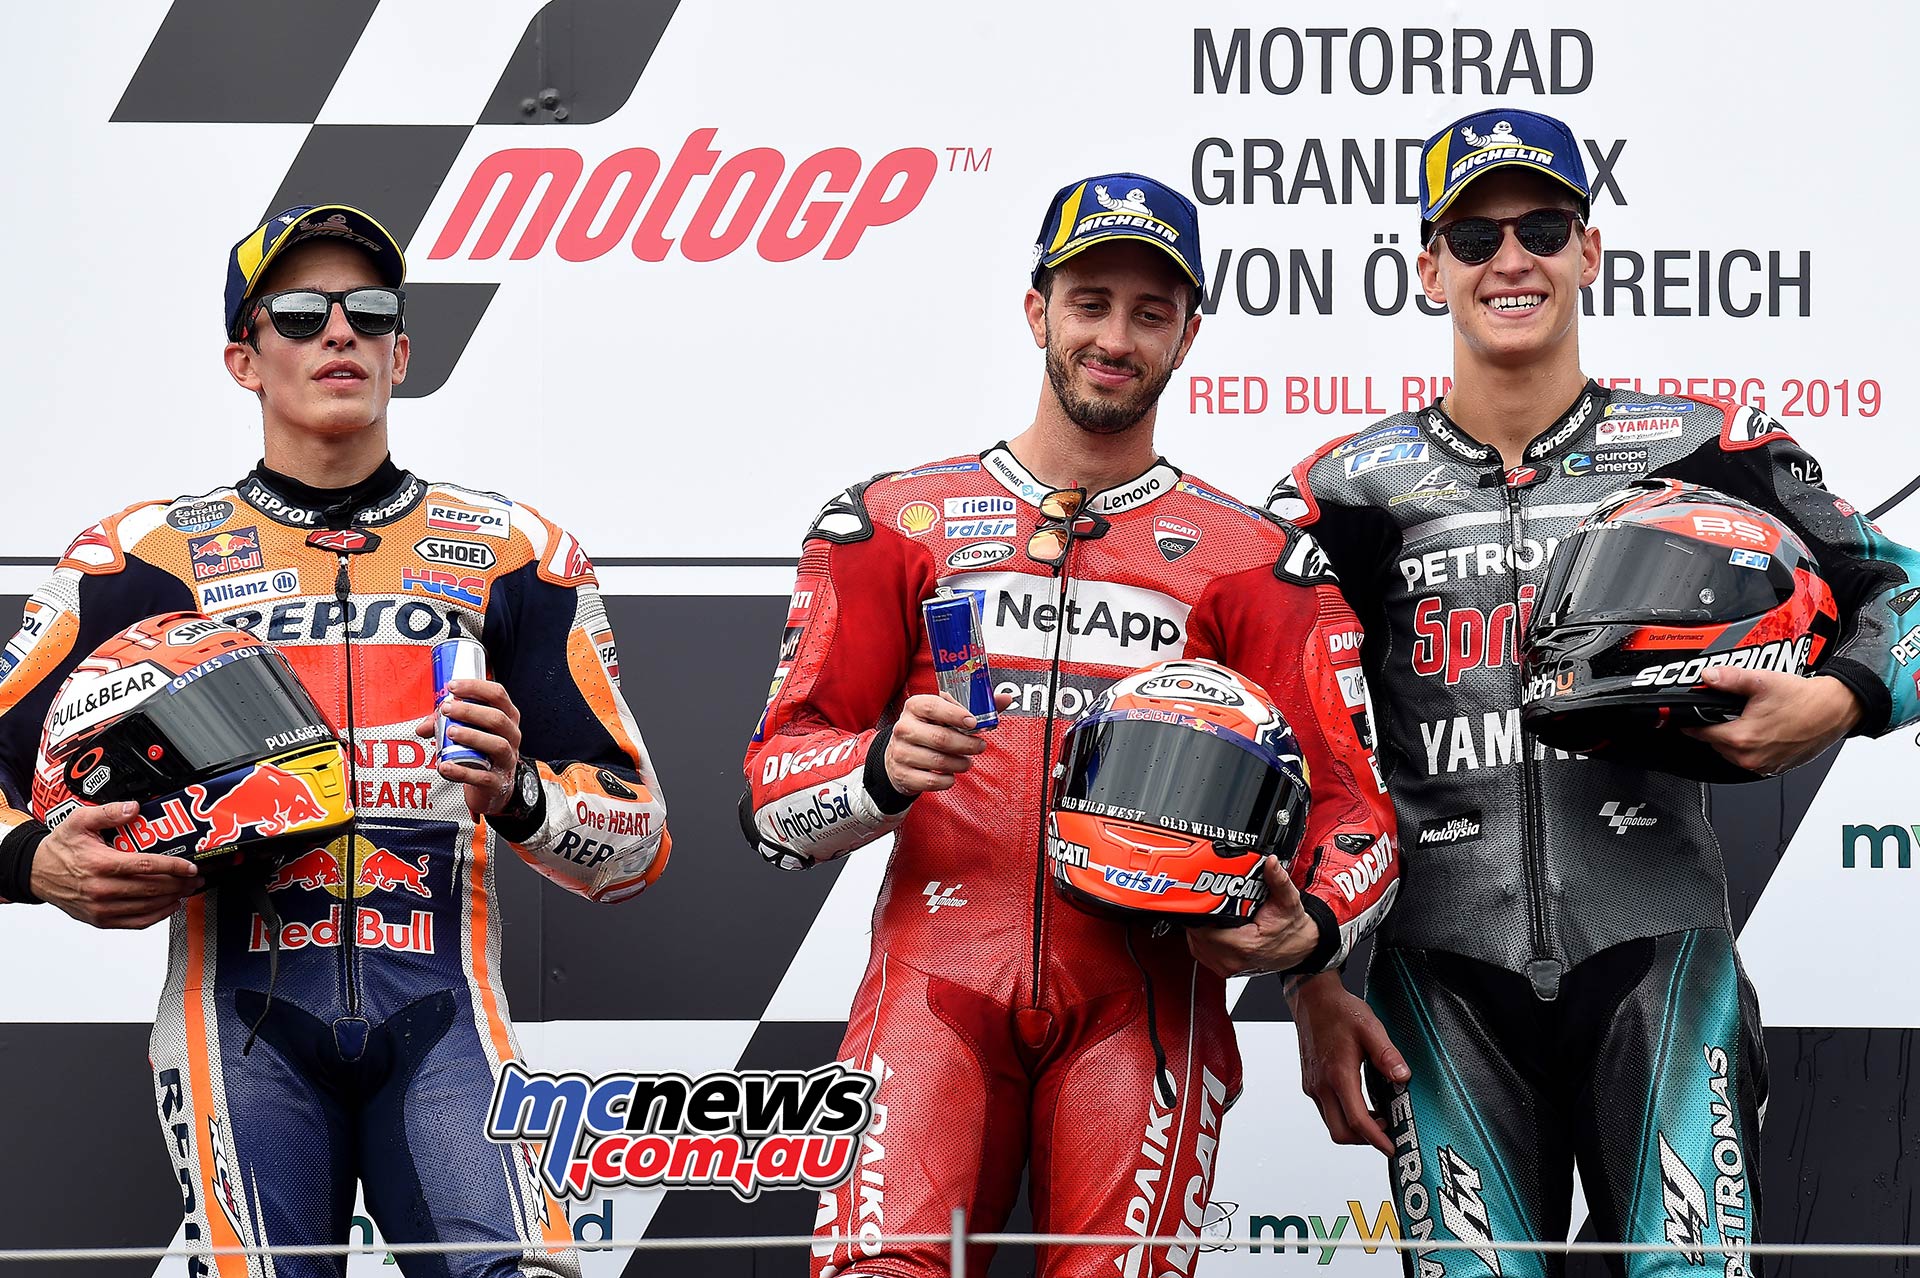 2019-motogp-rnd11-redbullring-race-podium-dovizioso-marquez-quartararo.jpg